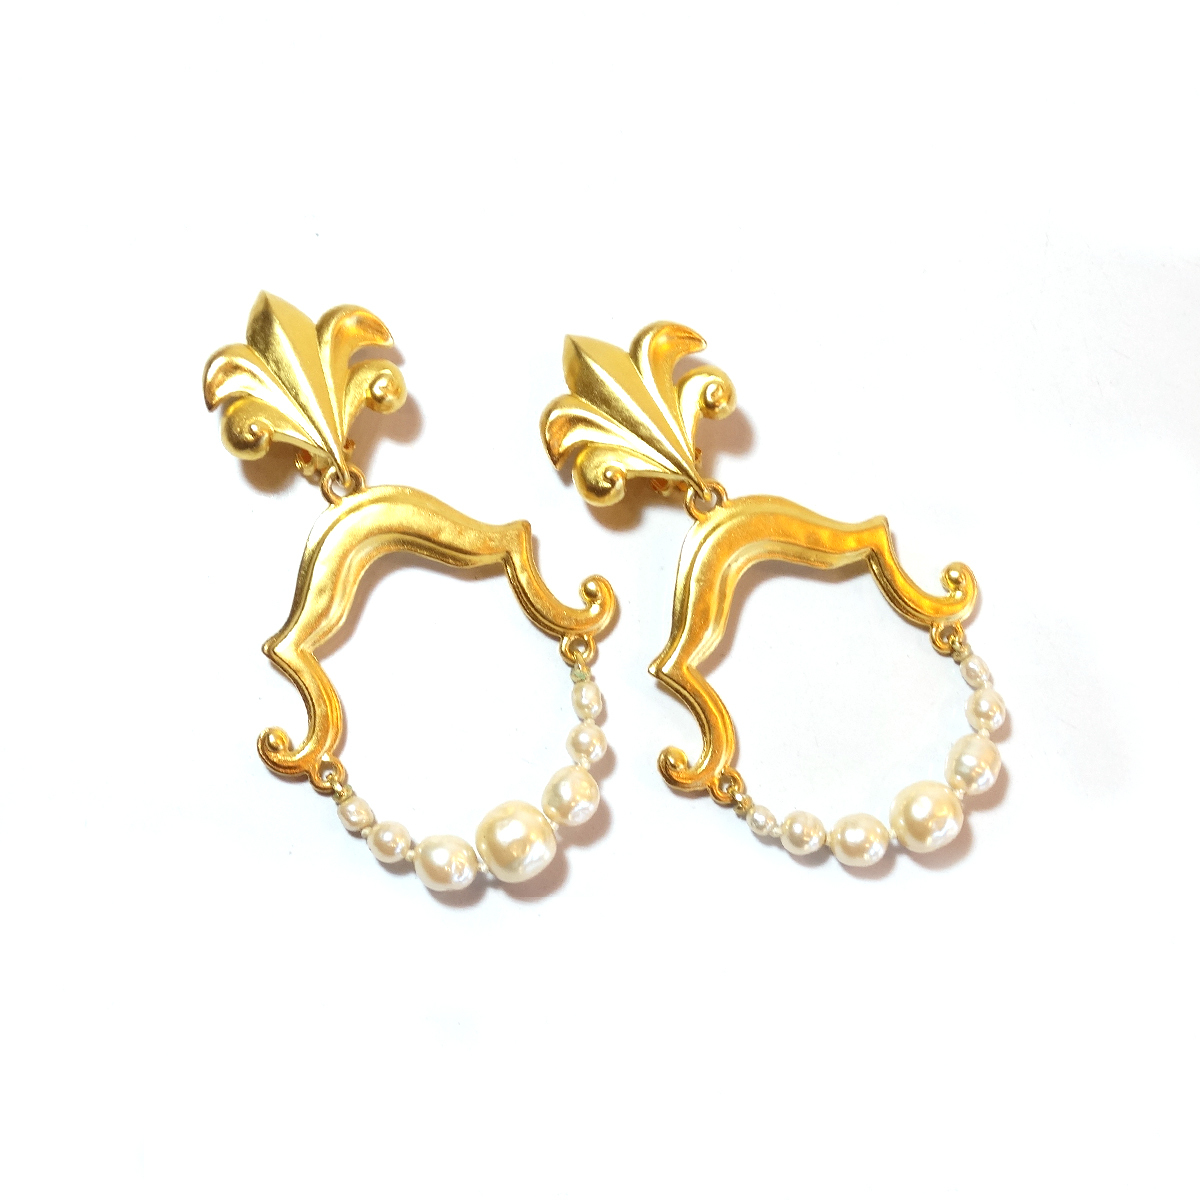 France Karl Lagerfeld Vintage Earrings カールラガーフェルド フランス イヤリング ゴールド パール デザインイヤリング ヴィンテージ_画像1